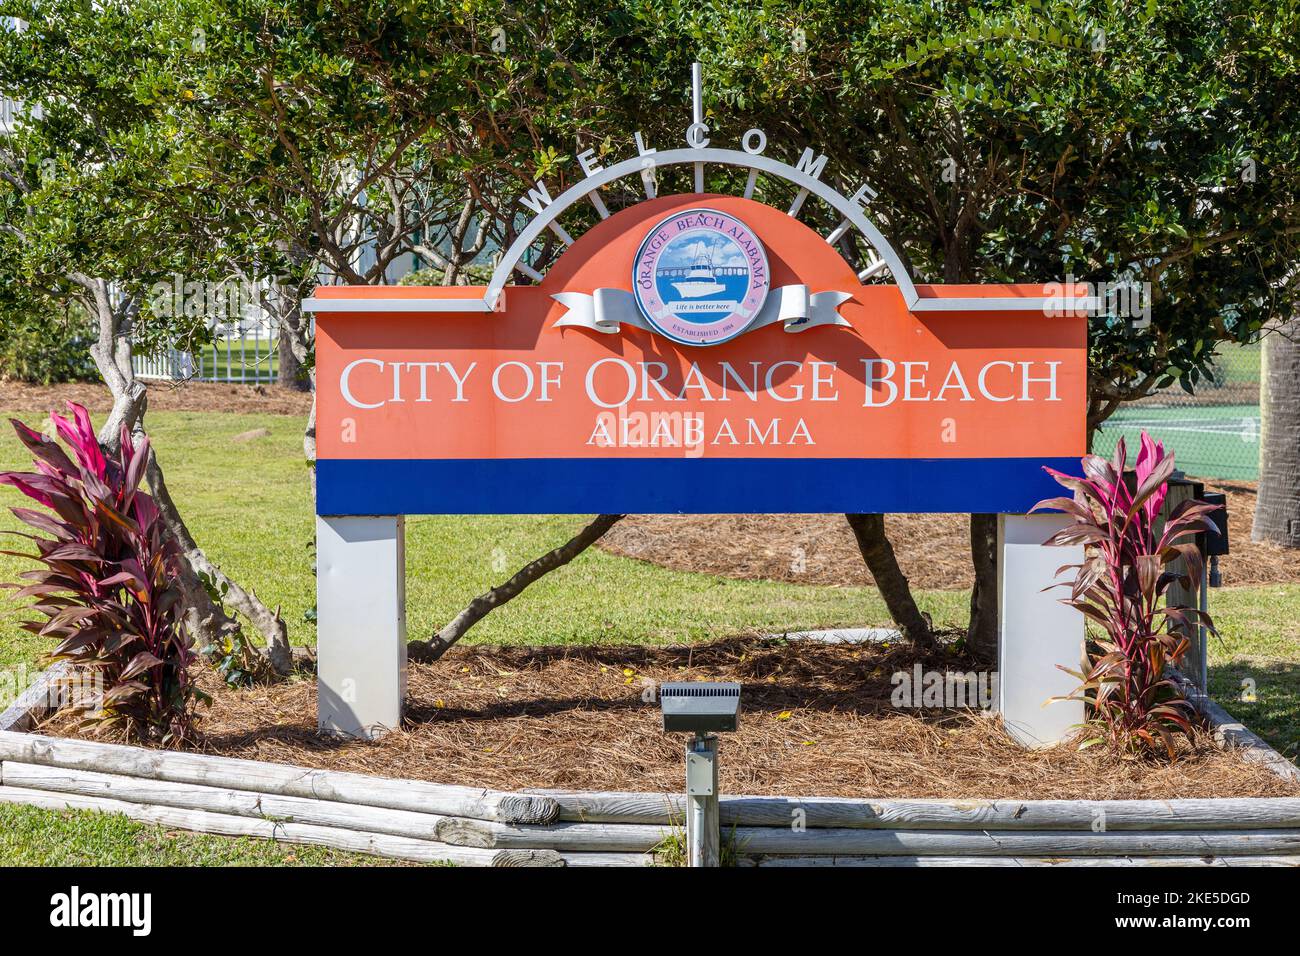 City Of Orange Beach Boundary Sign Alabama USA, Orange Beach A Community On The Gulf Shores Alabama America Stock Photo